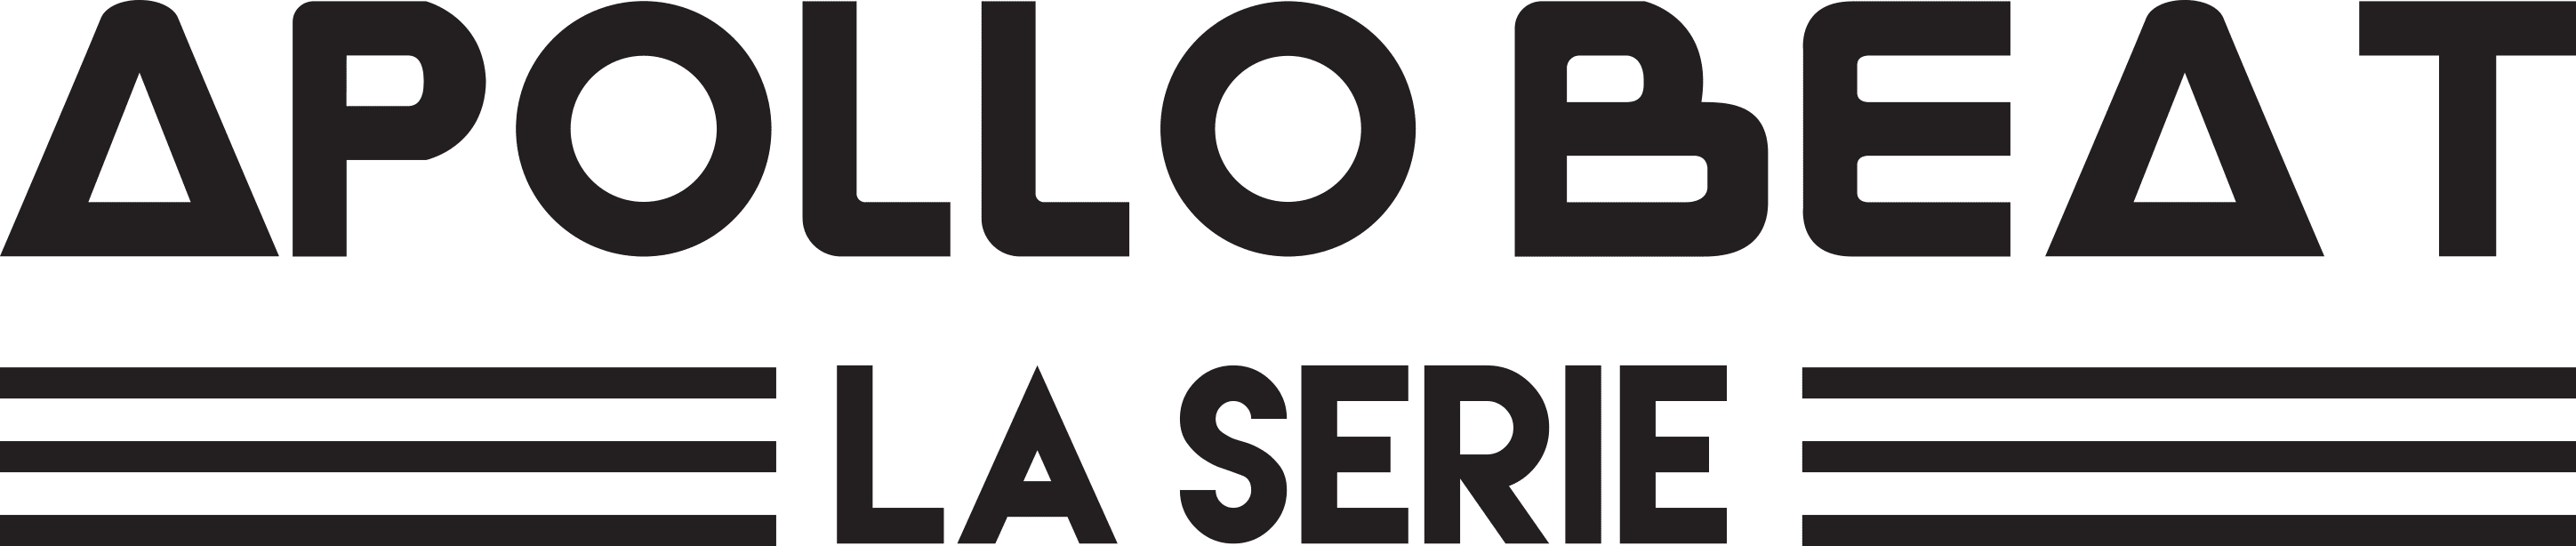 apollobeat-laserie-logo_12